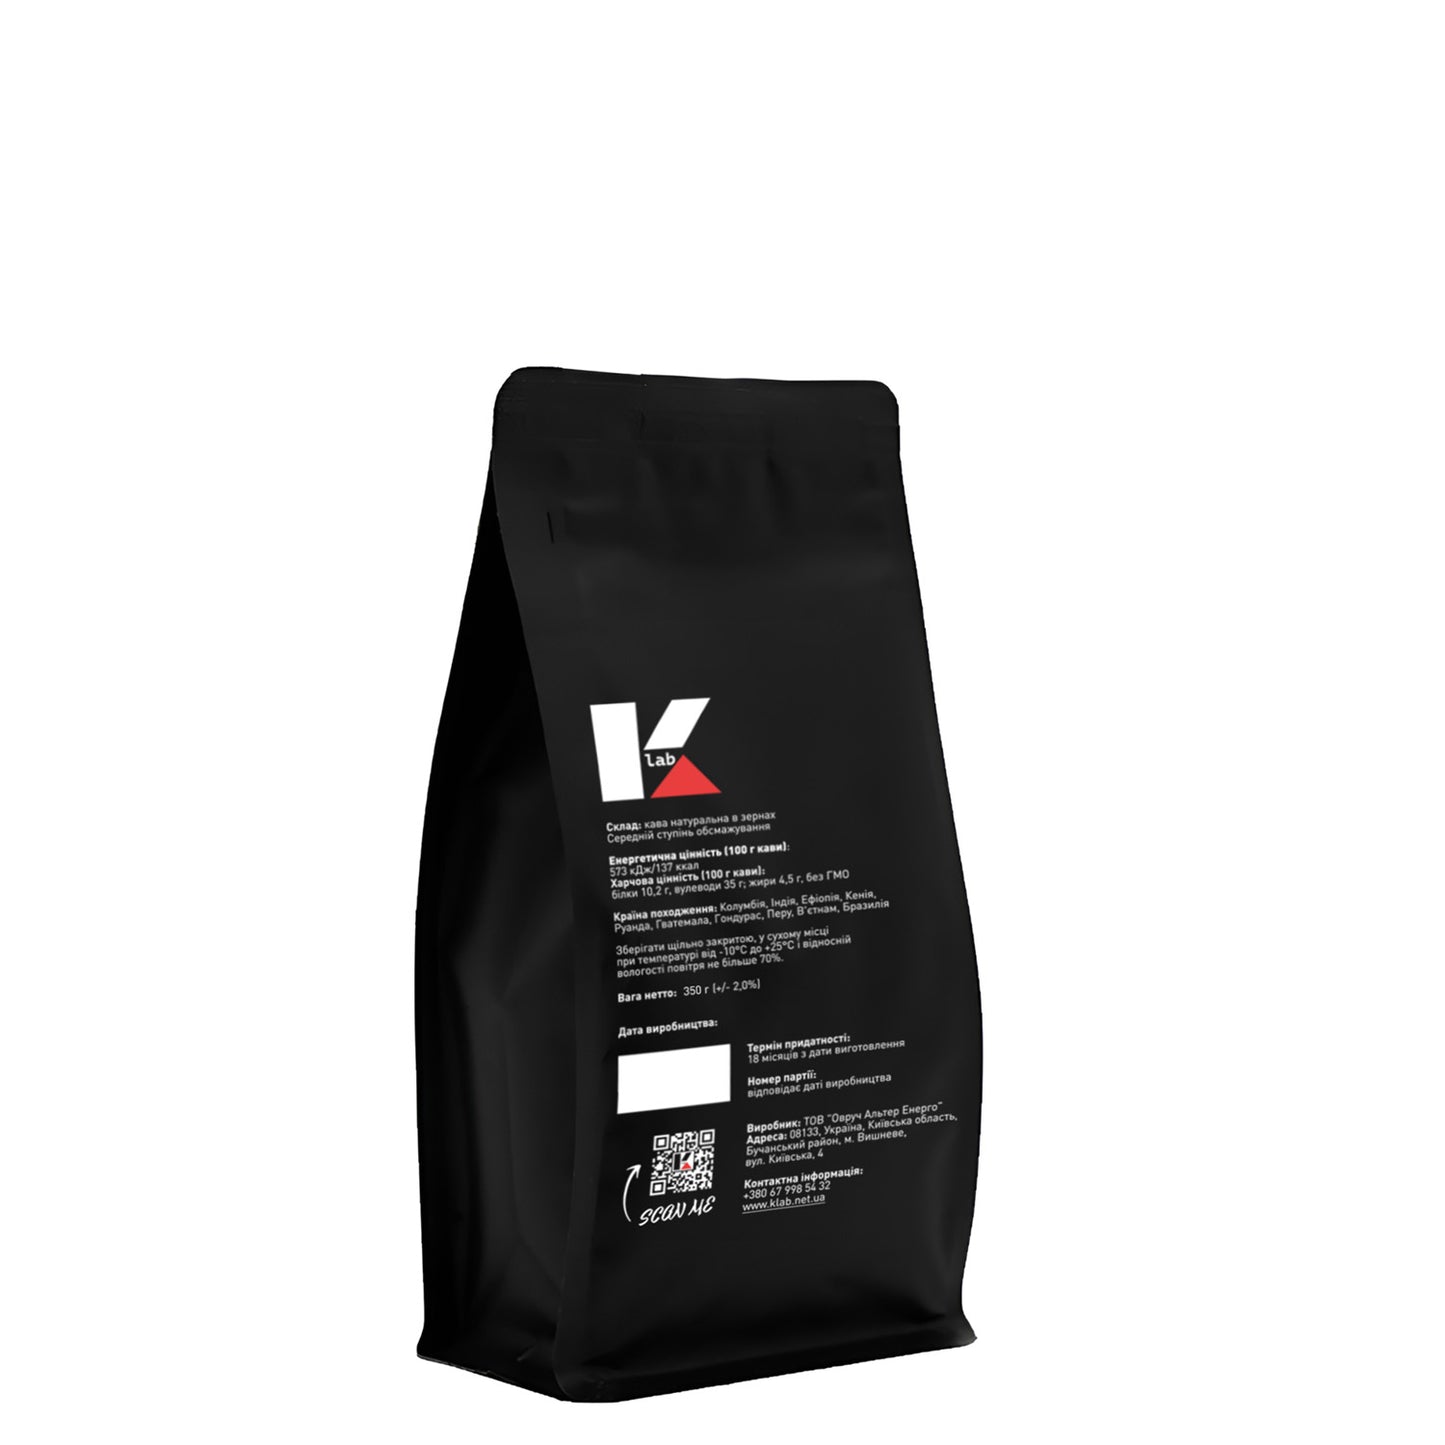 COFFEE STORY №11 - Klab (0.35kg back)